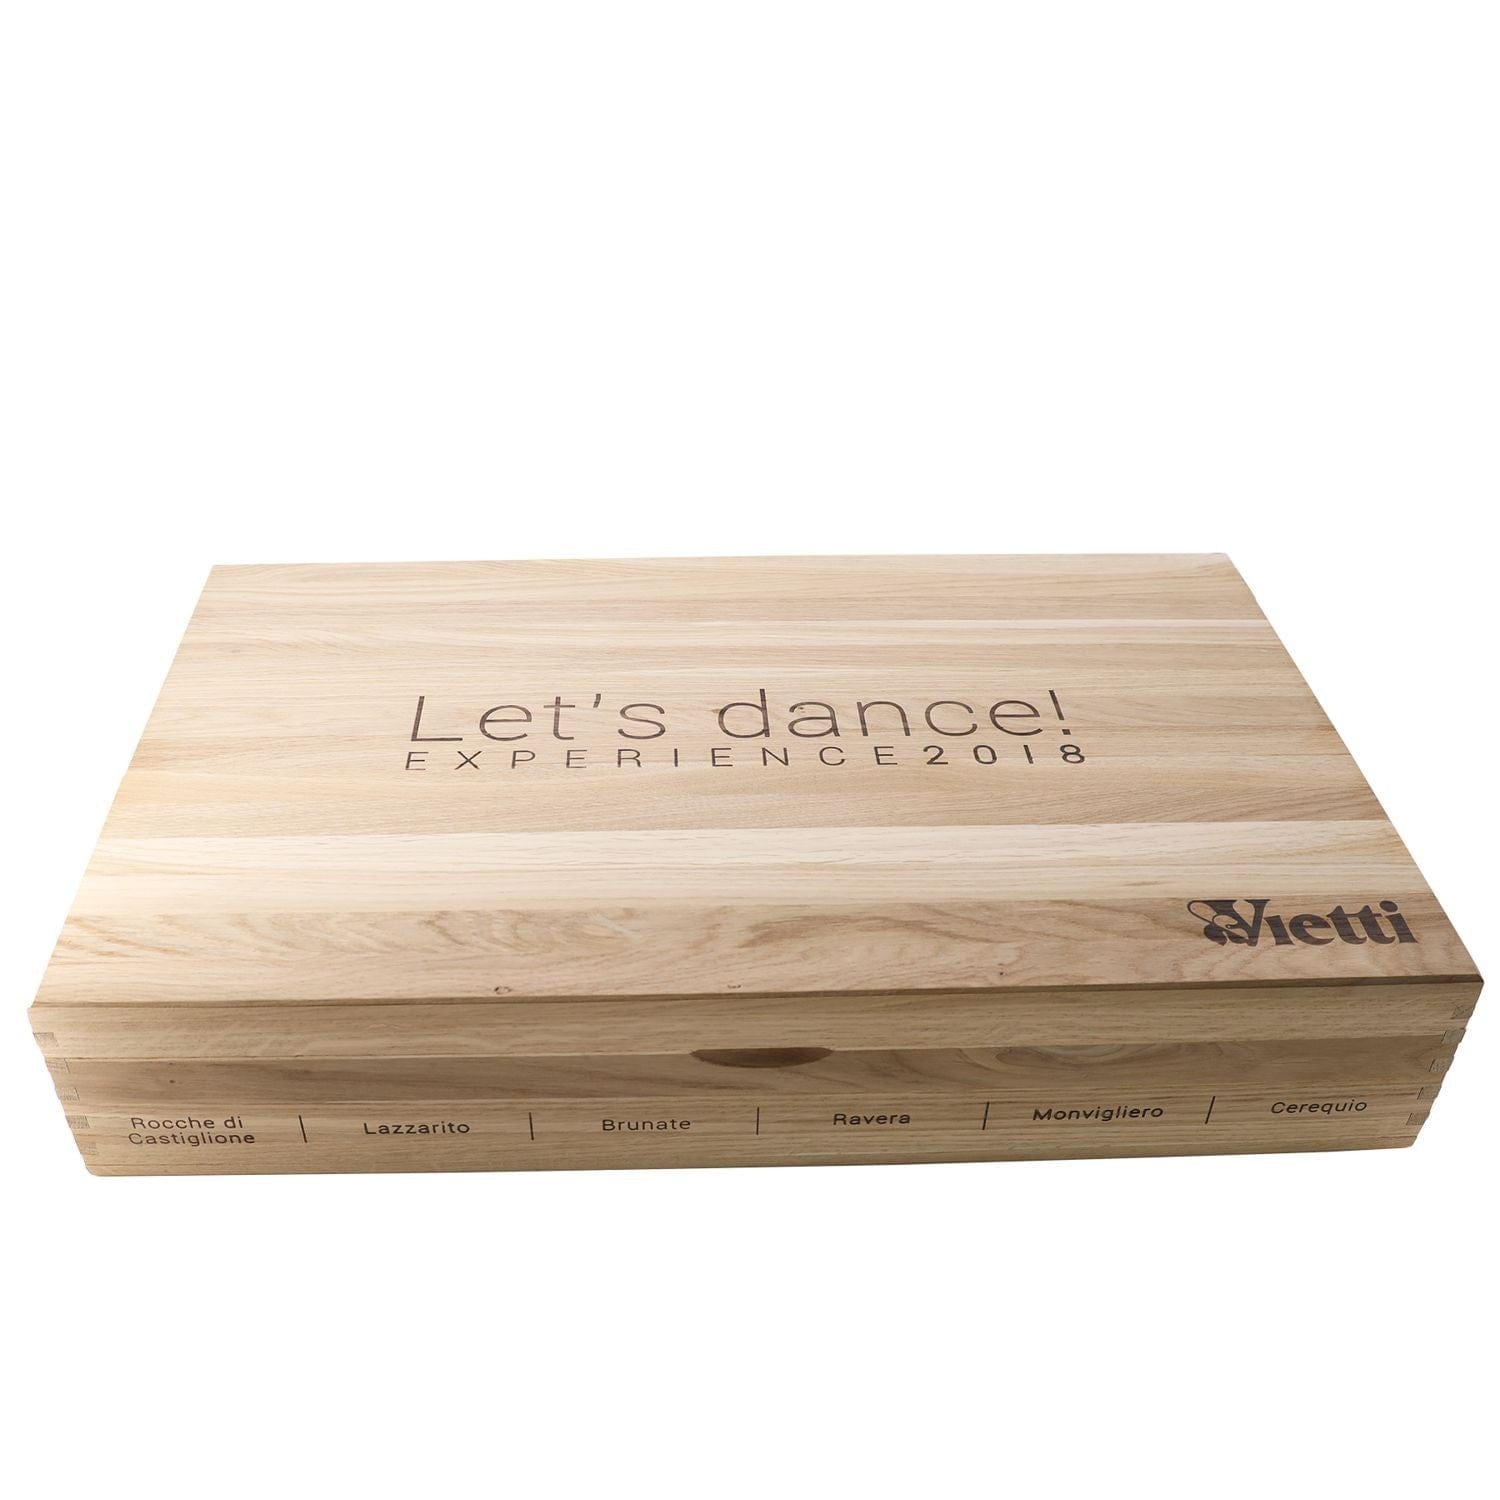 Vietti Barolo 2019 Limited Edition "Let's Dance Experience" 6x75 cl OWC - Vietti